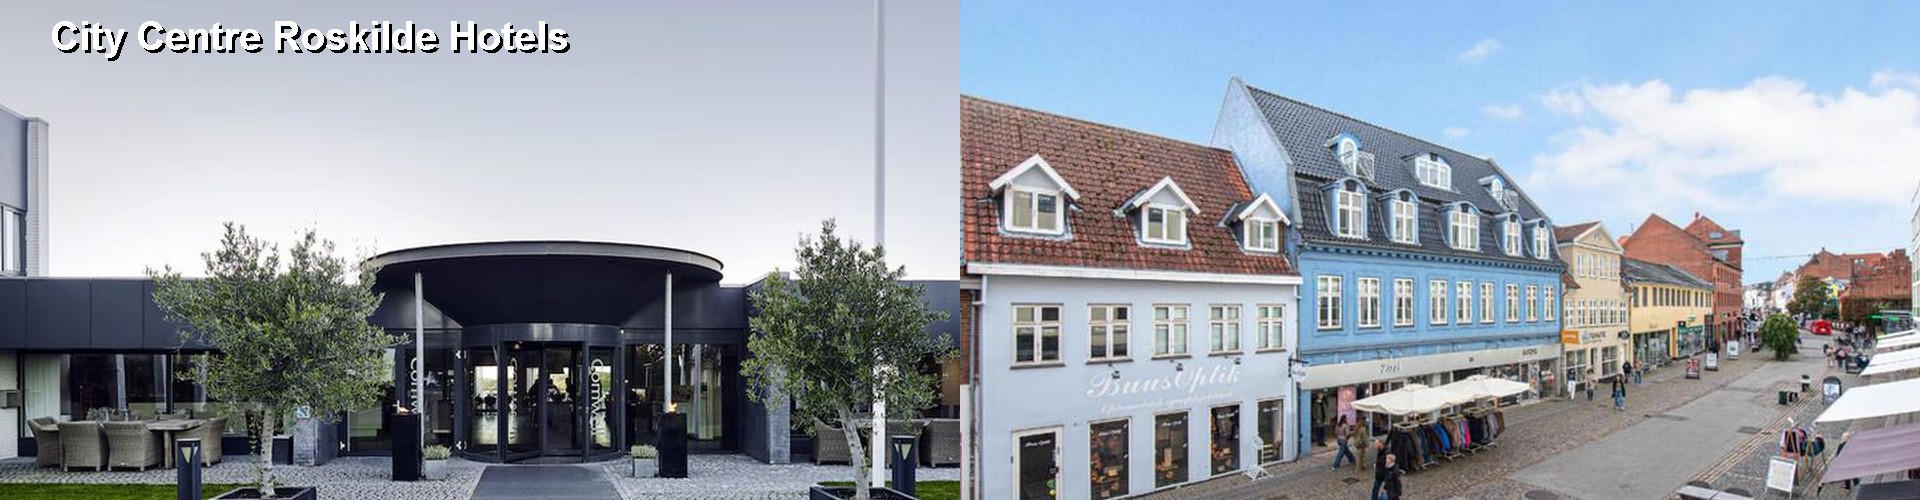 5 Best Hotels near City Centre Roskilde